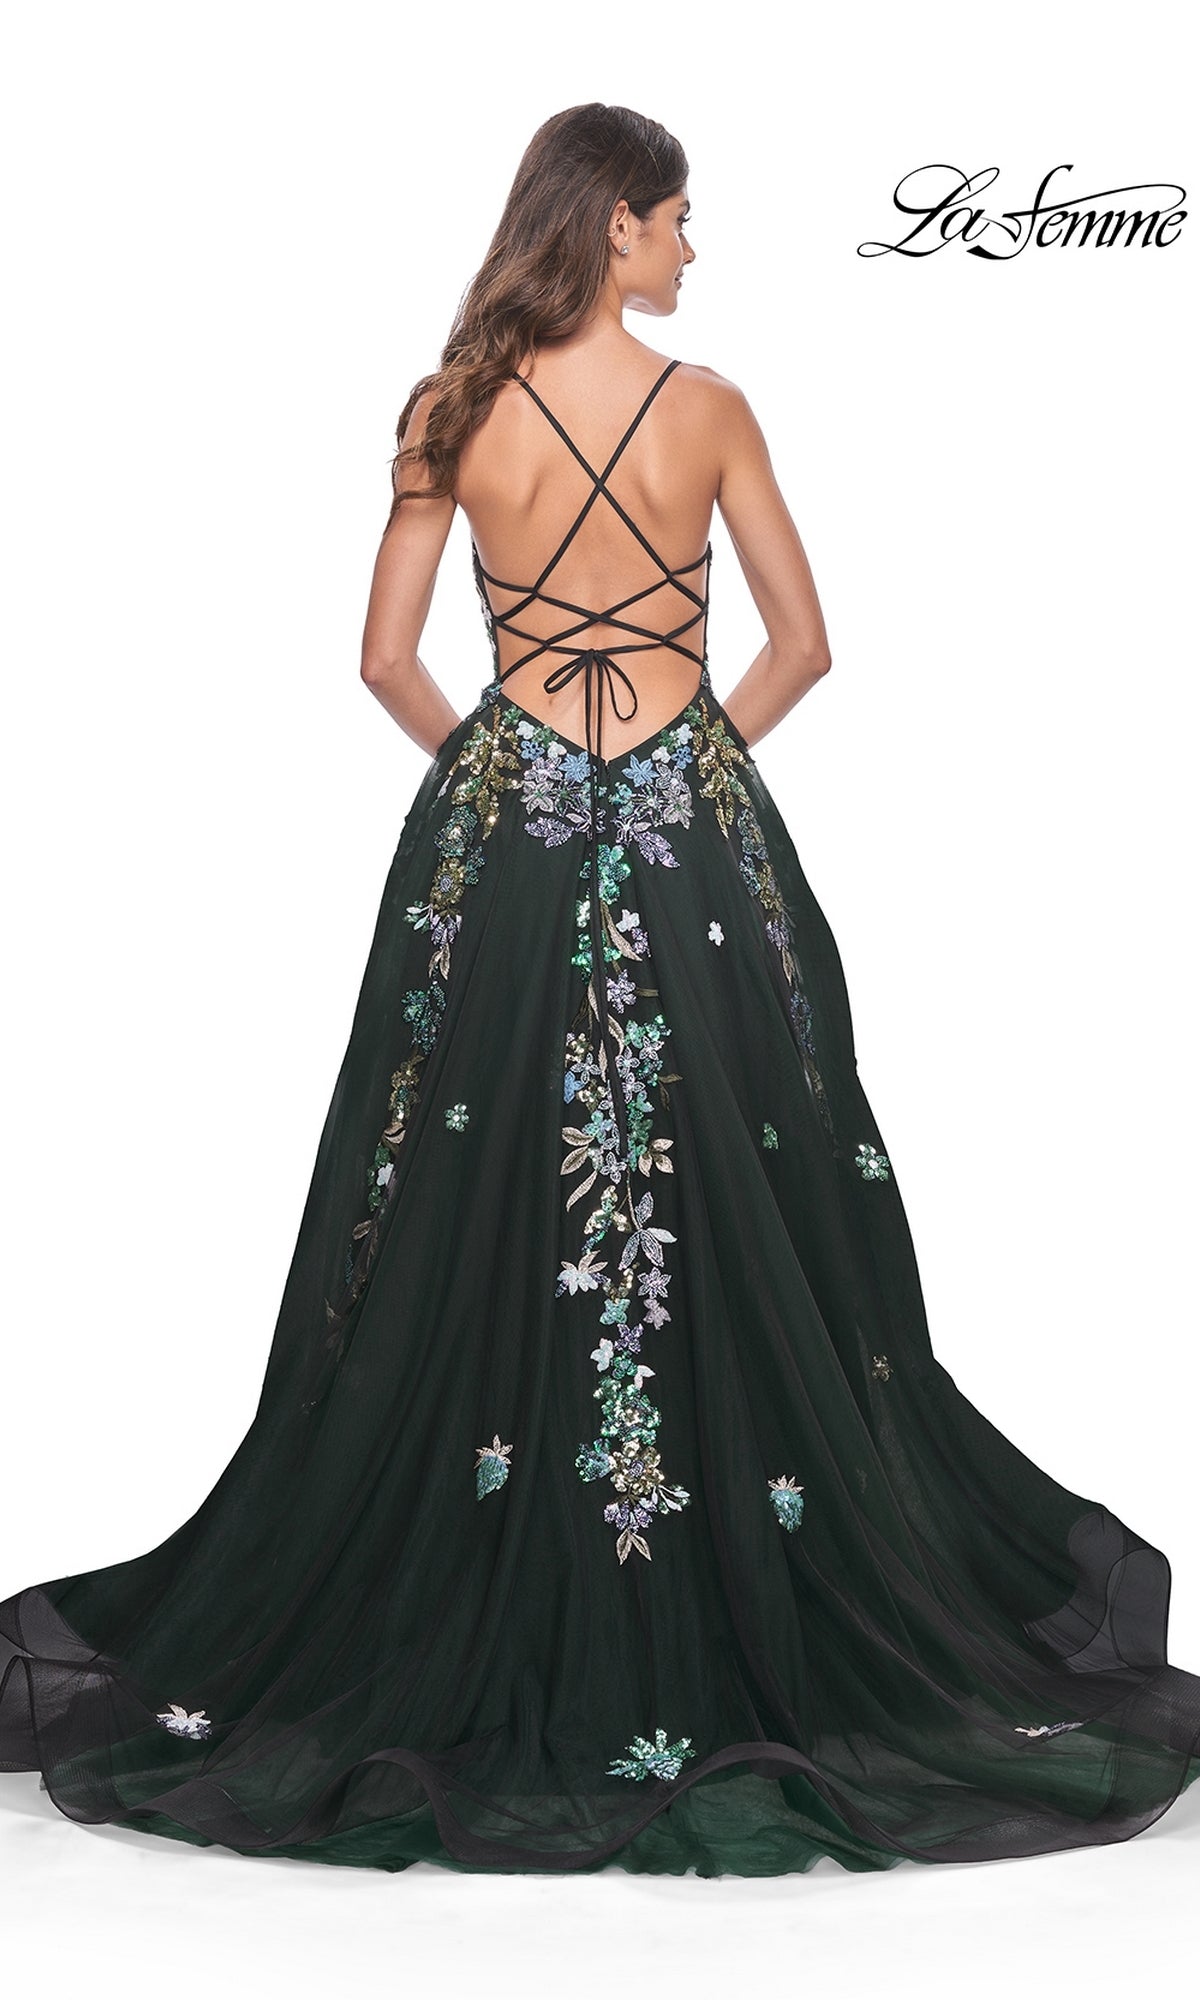  La Femme 32023 Formal Prom Dress